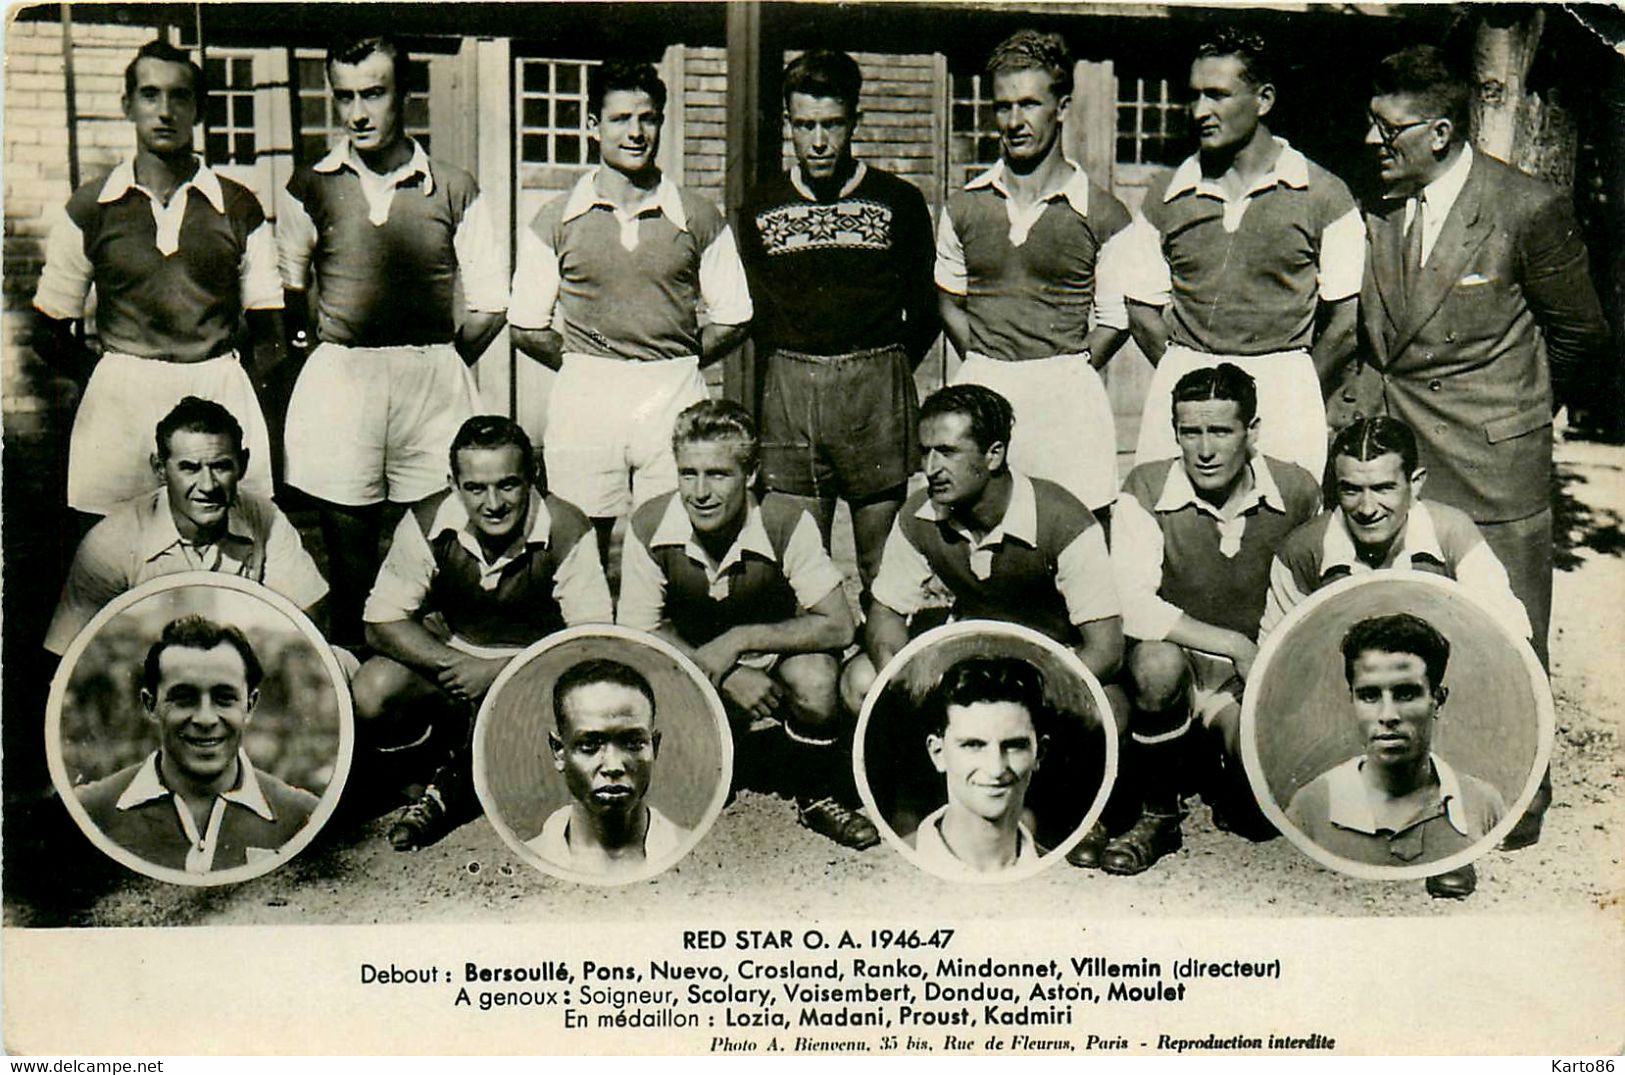 Soccer - sport football * carte photo * club du RED STAR O.A. 1946 1947 *  équipe effectif * sports footballeurs red star